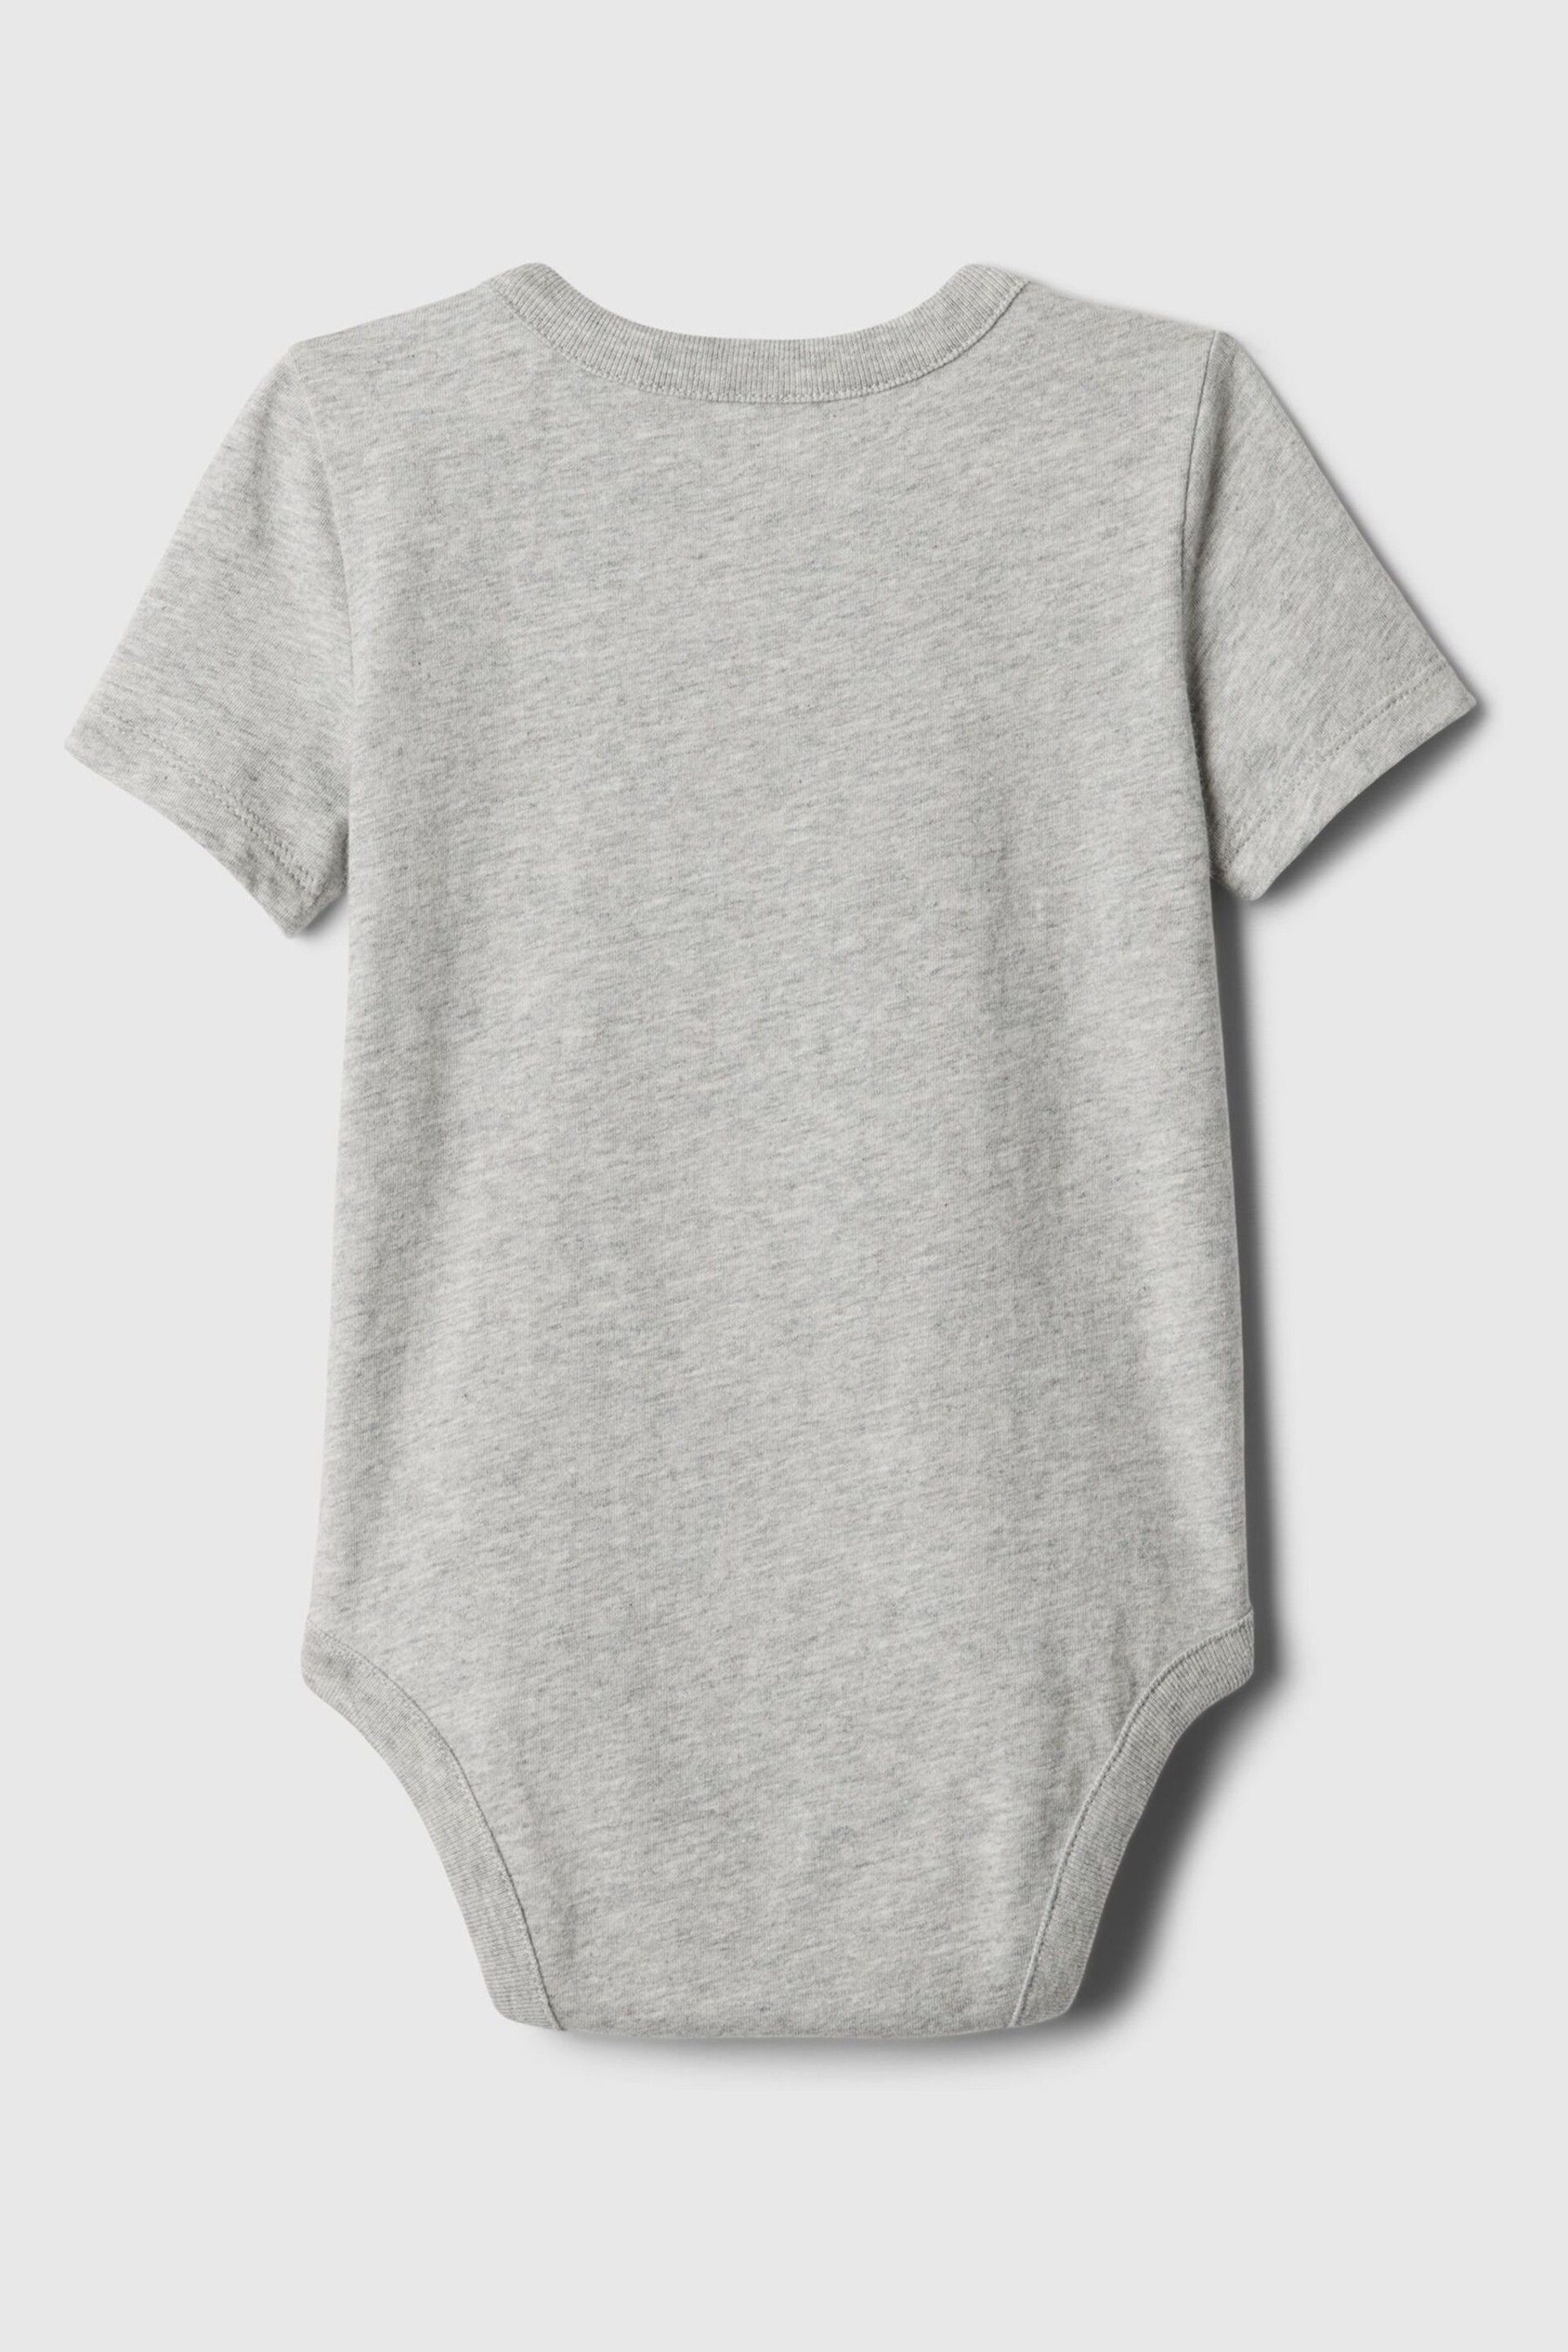 Gap Grey Embroidered Brannan Bear Pocket Short Sleeve Bodysuit (Newborn-24mths) - Image 2 of 2